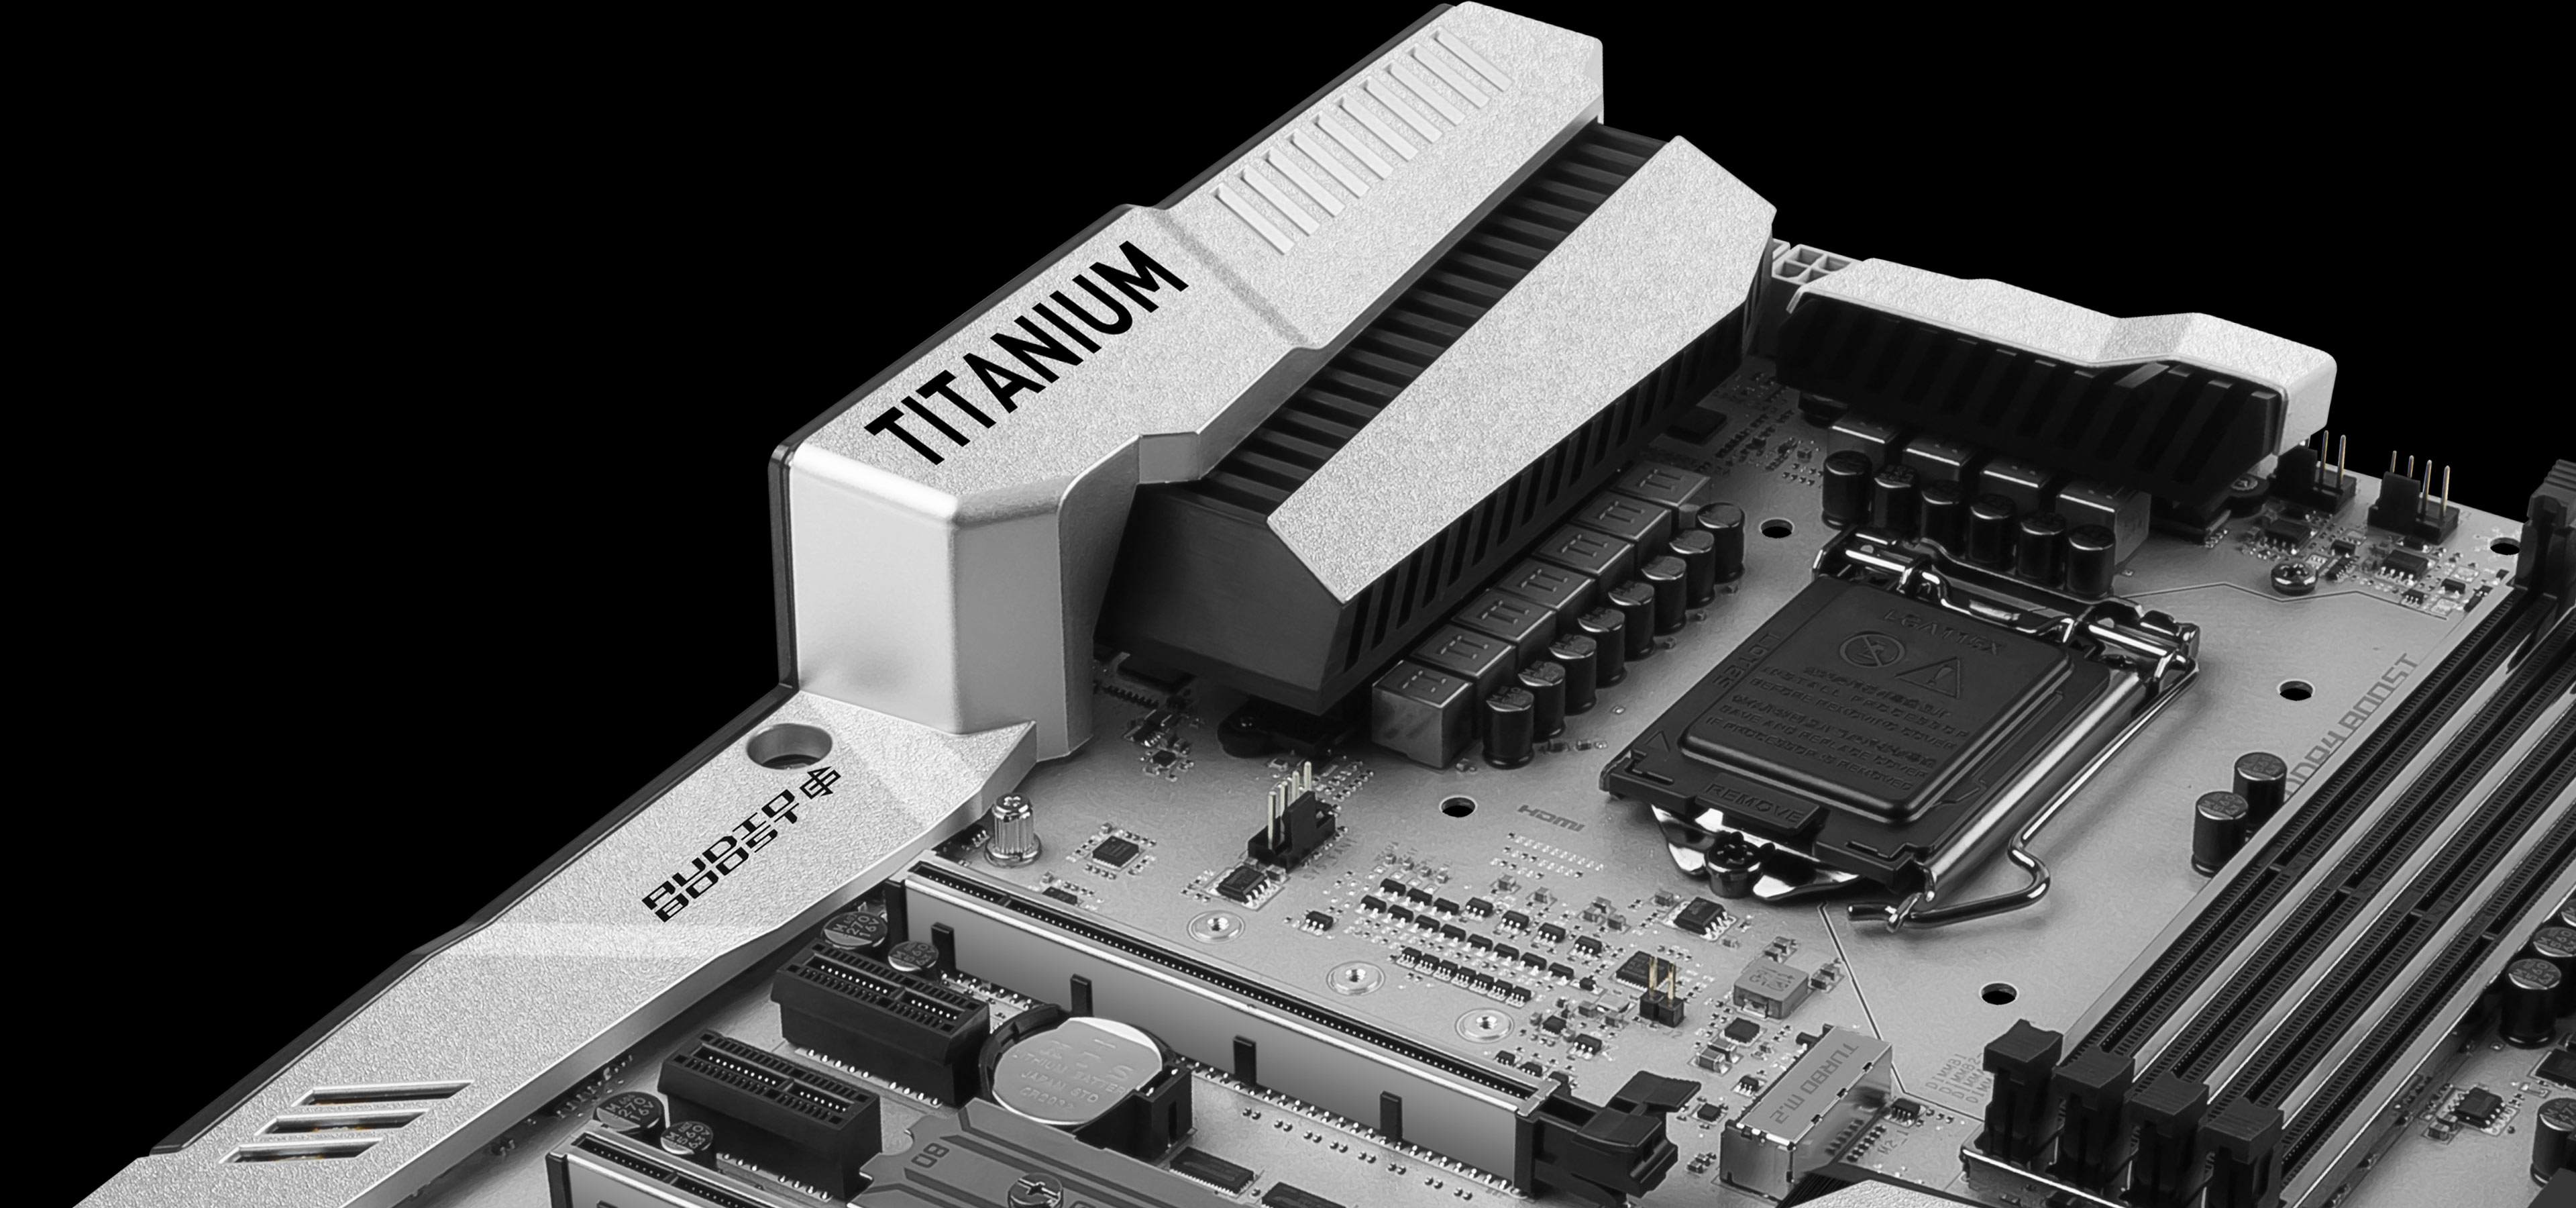 MSI Z270 Mpower Gaming Titanium LGA1151 ATX Motherboard